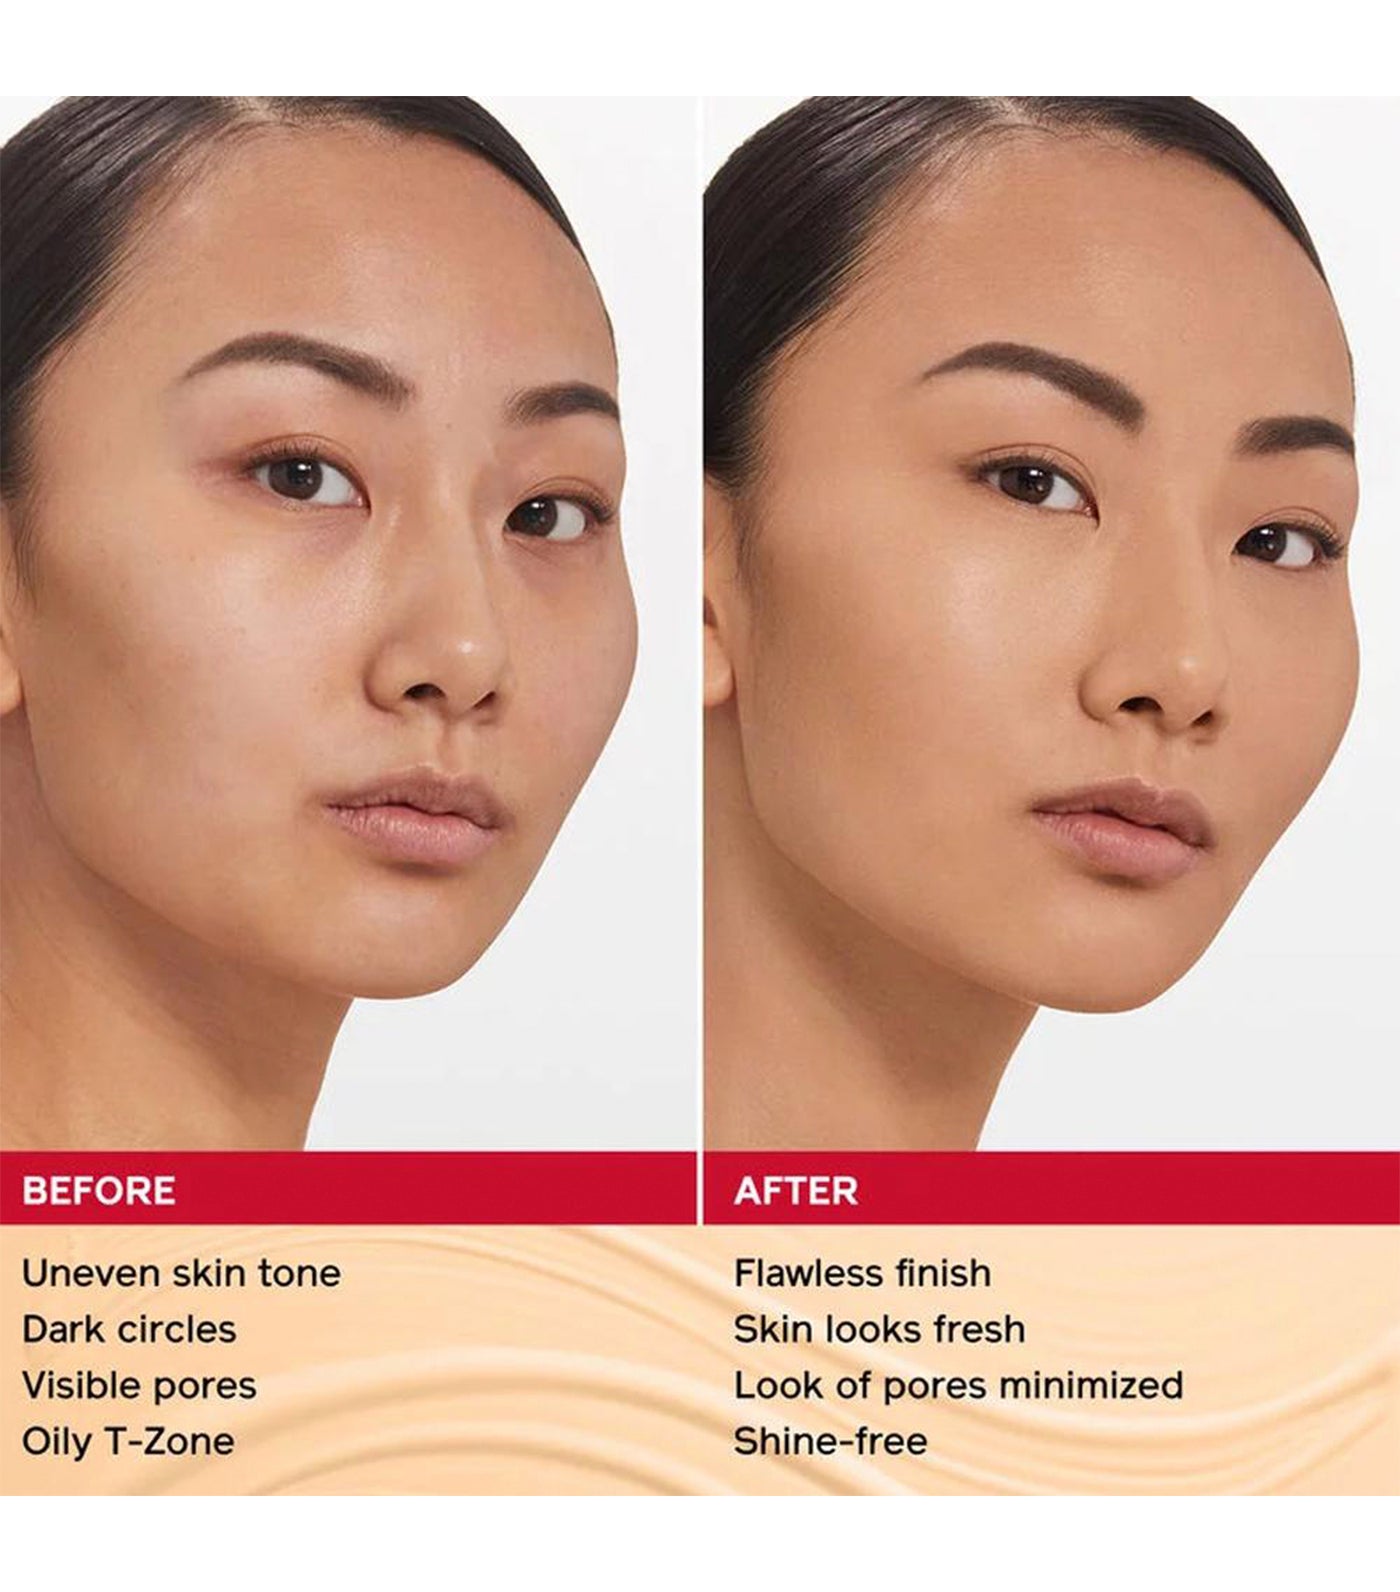 Shiseido Synchro Skin Self-Refreshing Foundation sand